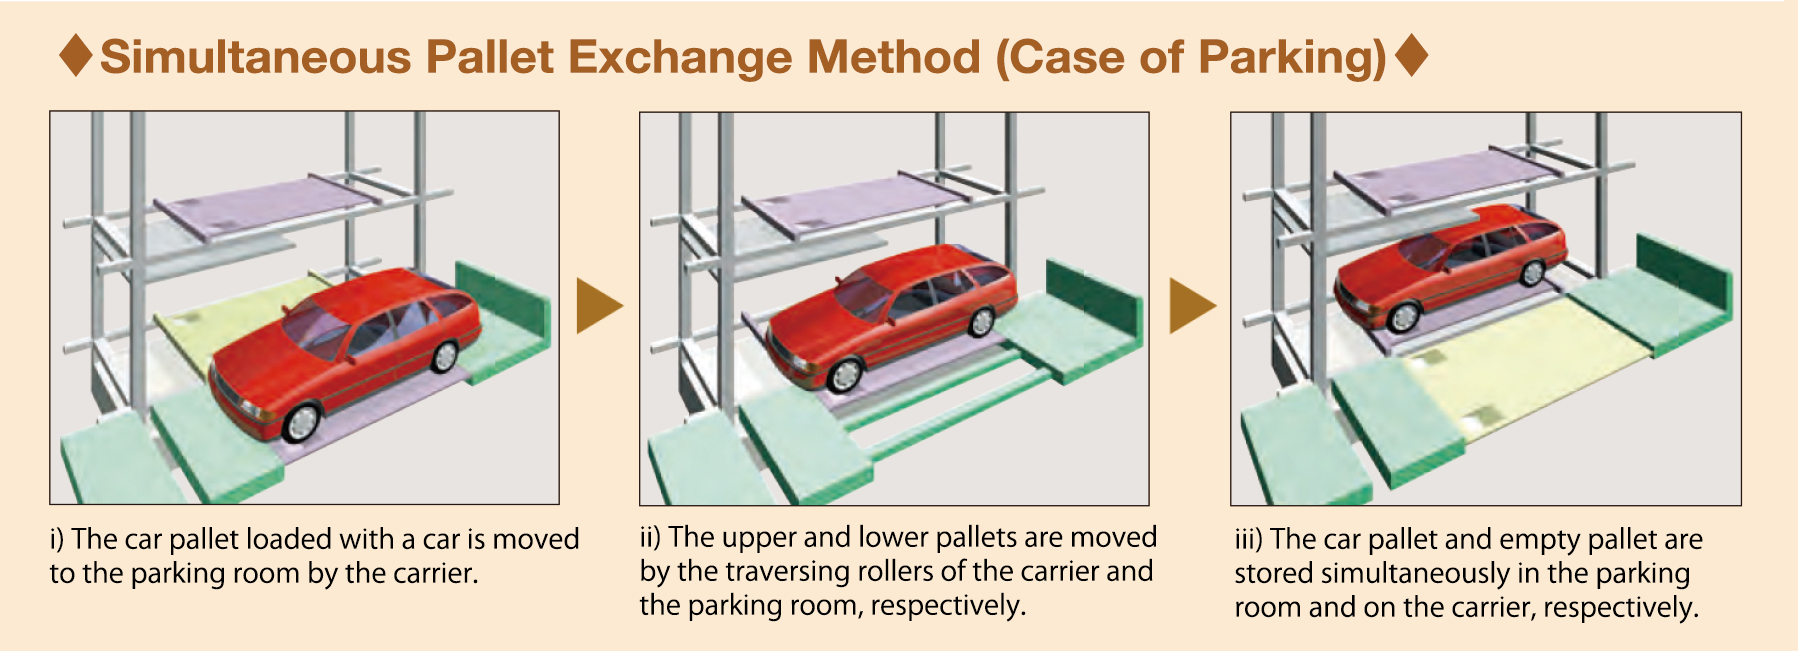 Simultaneous Pallet Exchange Method (Case of Parking)